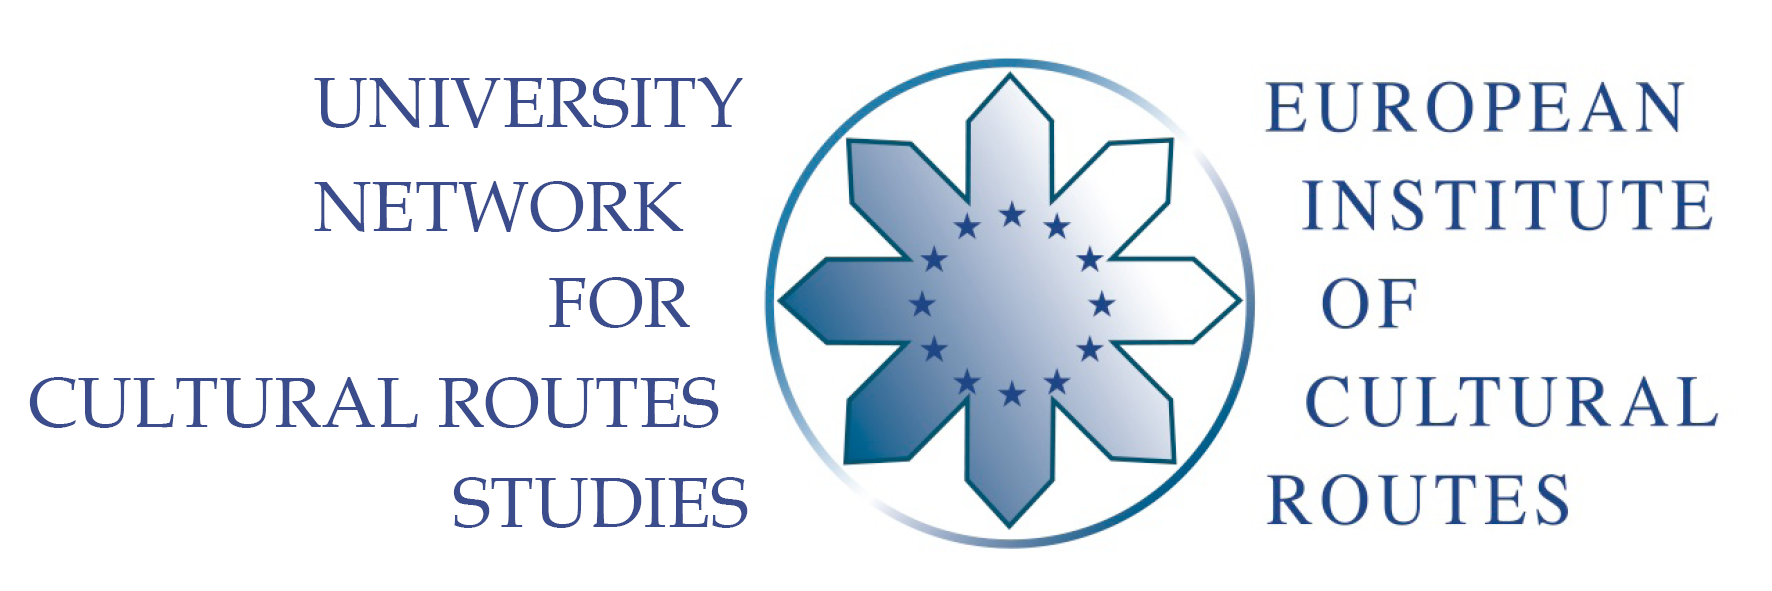 university network - logo.png